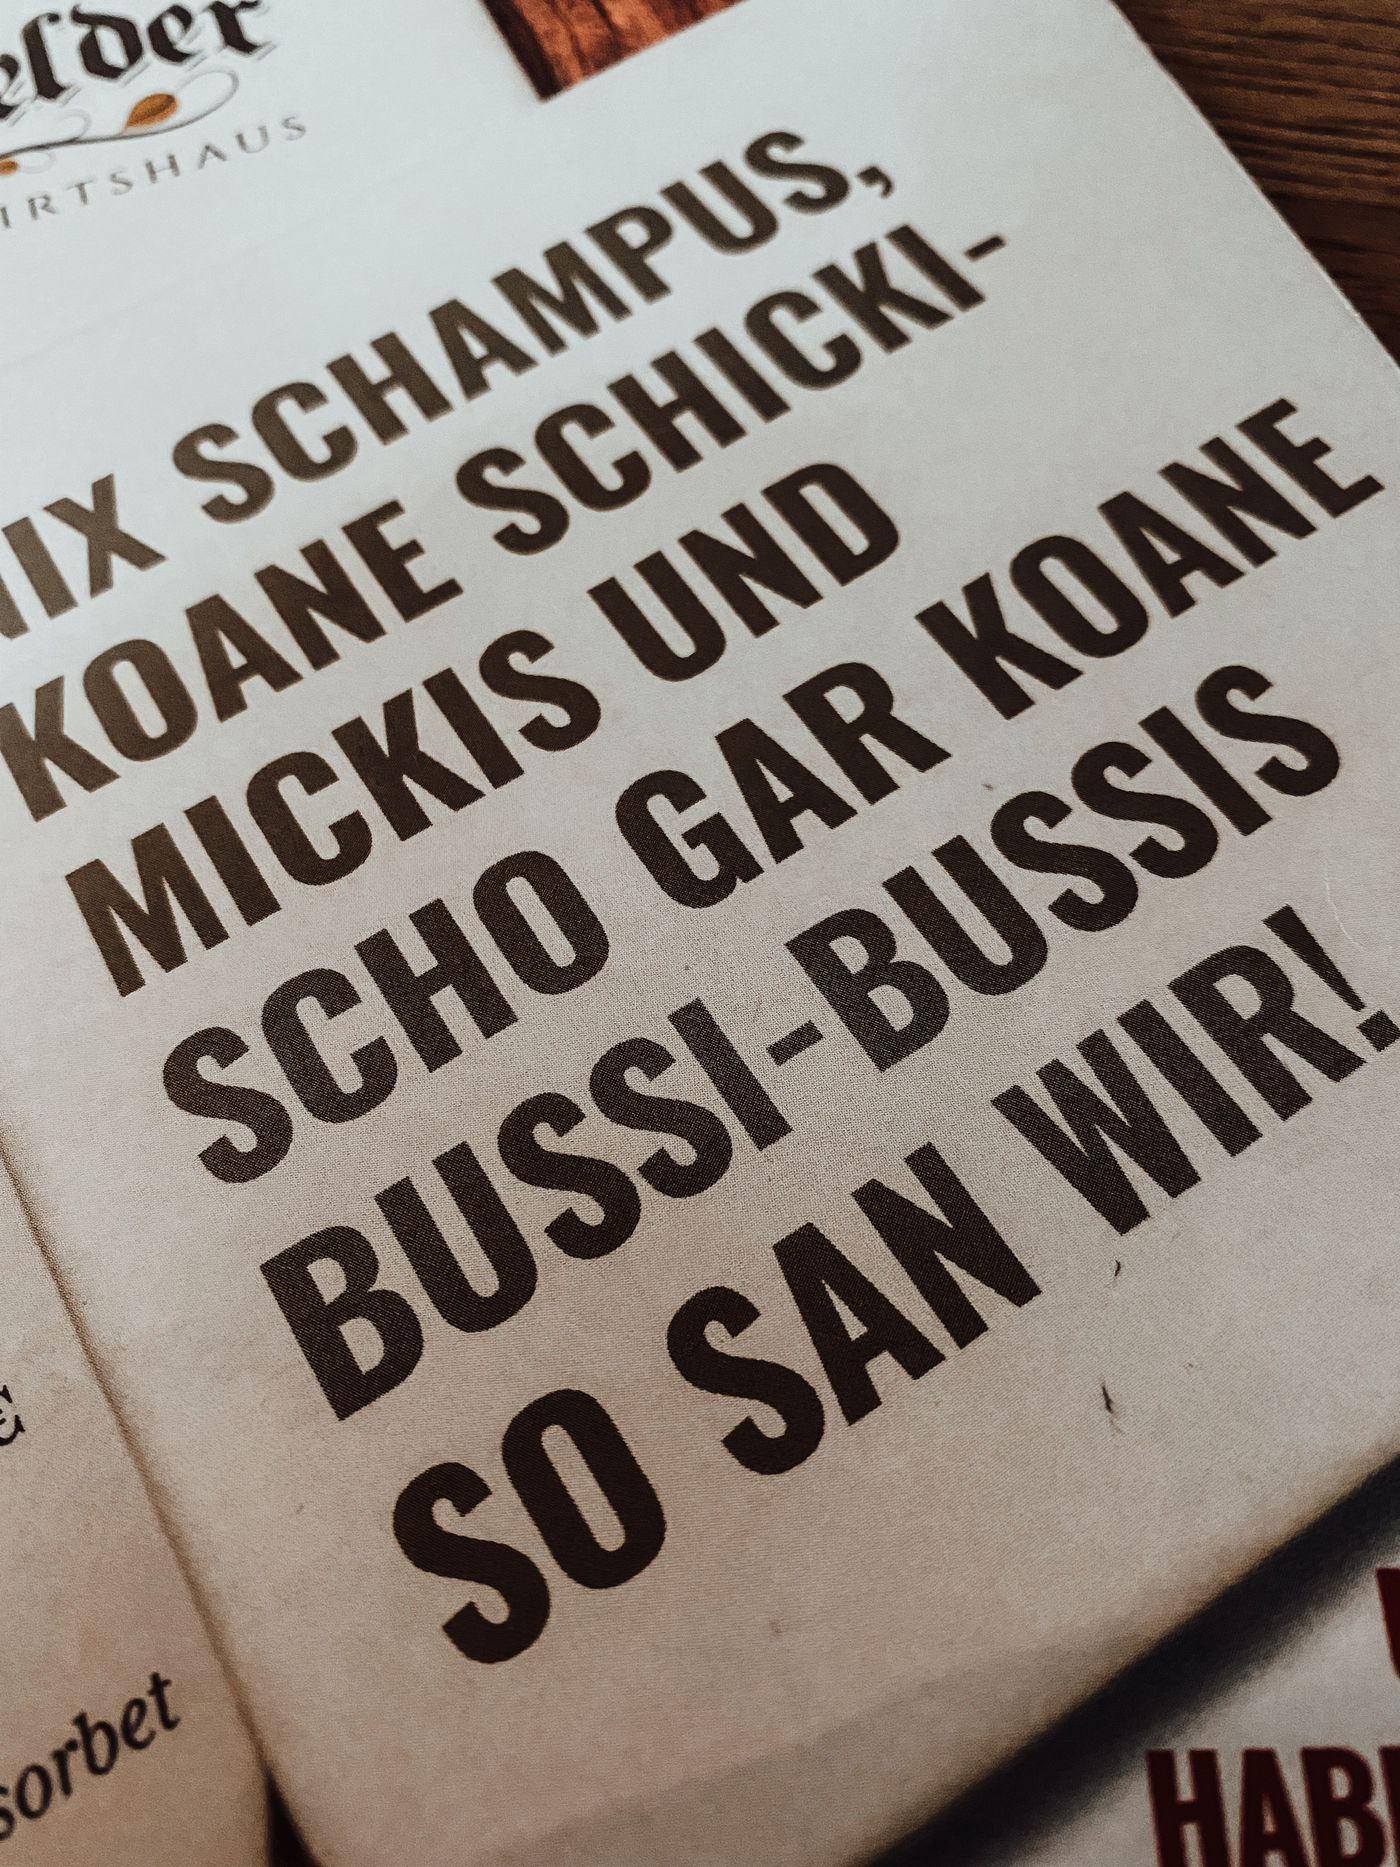 Nix Schampus, koane Schicki-Mickis…